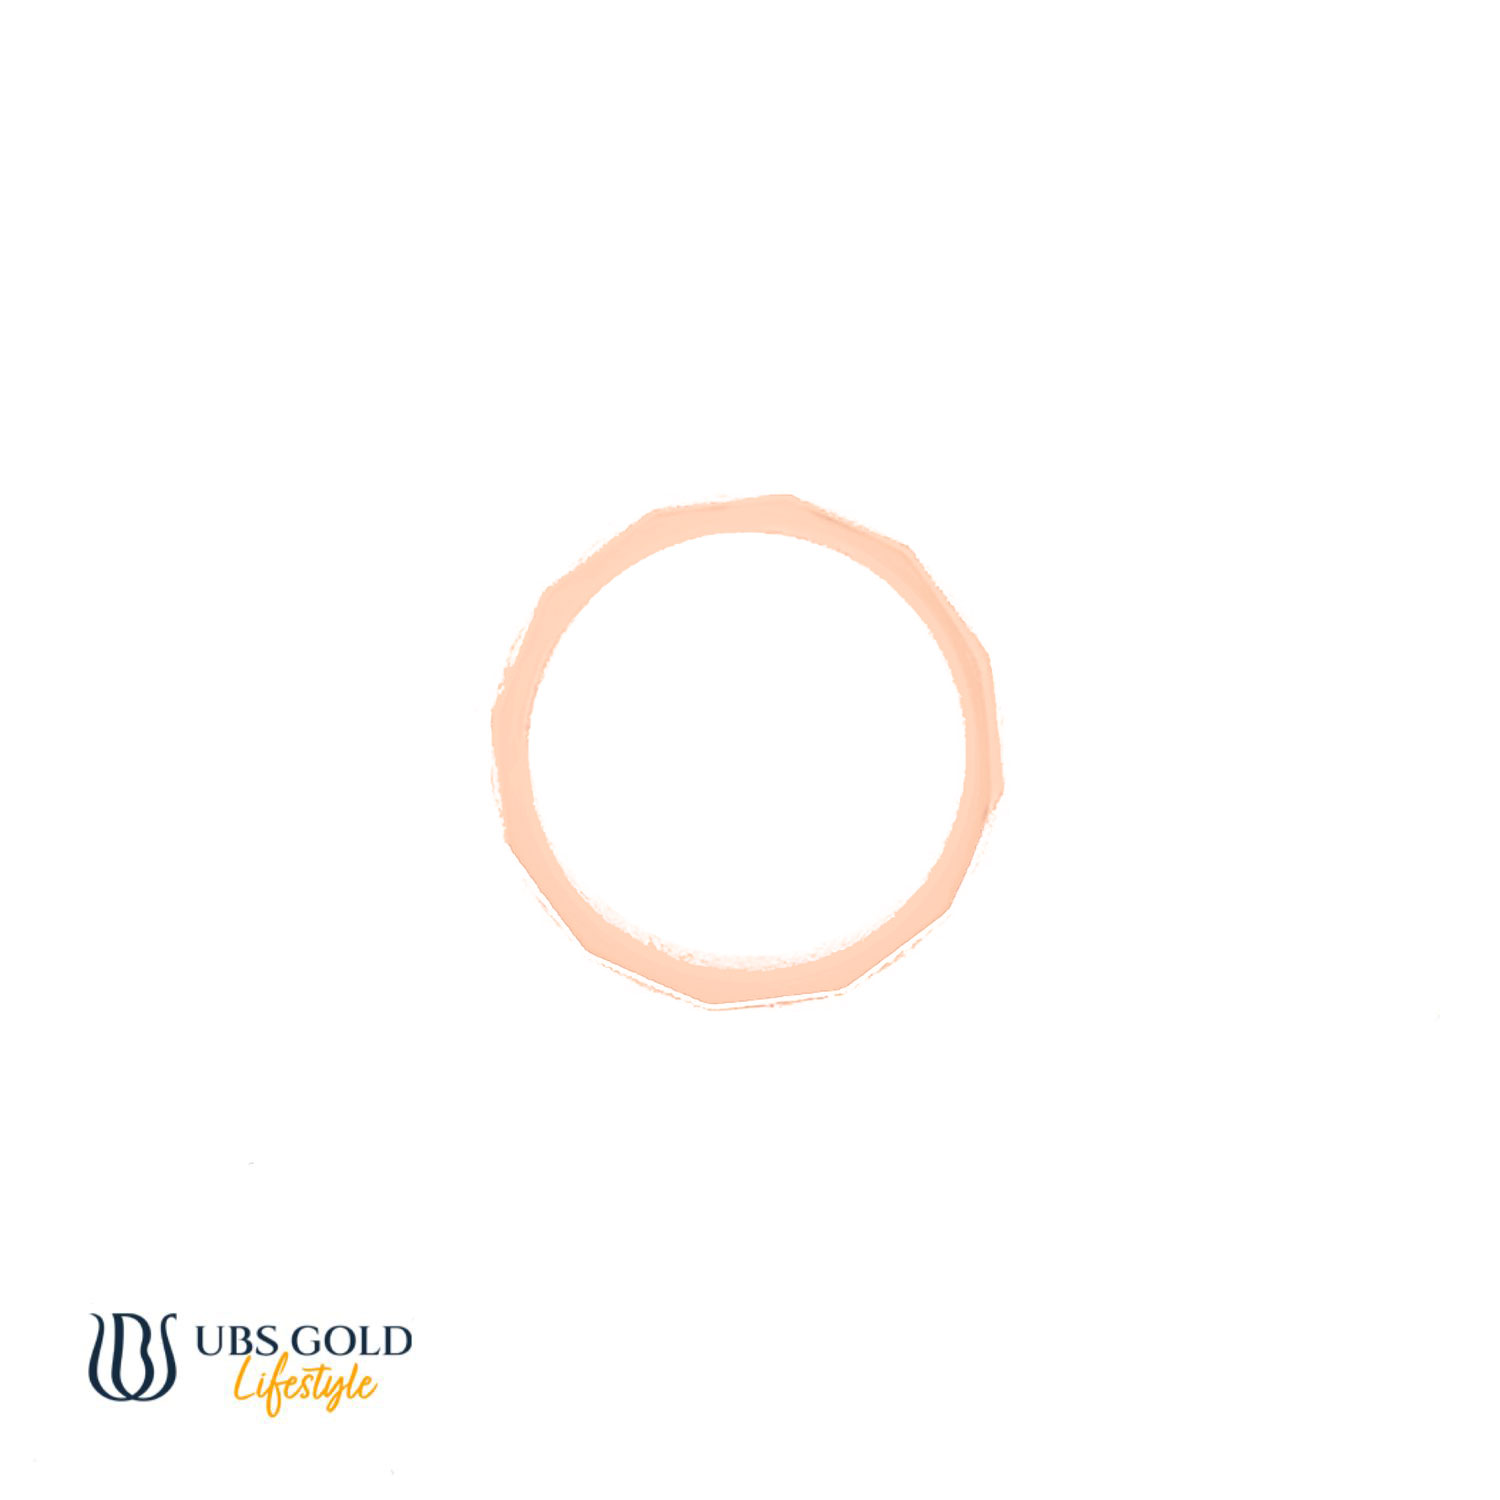 UBS Gold Cincin Emas - E7c0006 - 17K